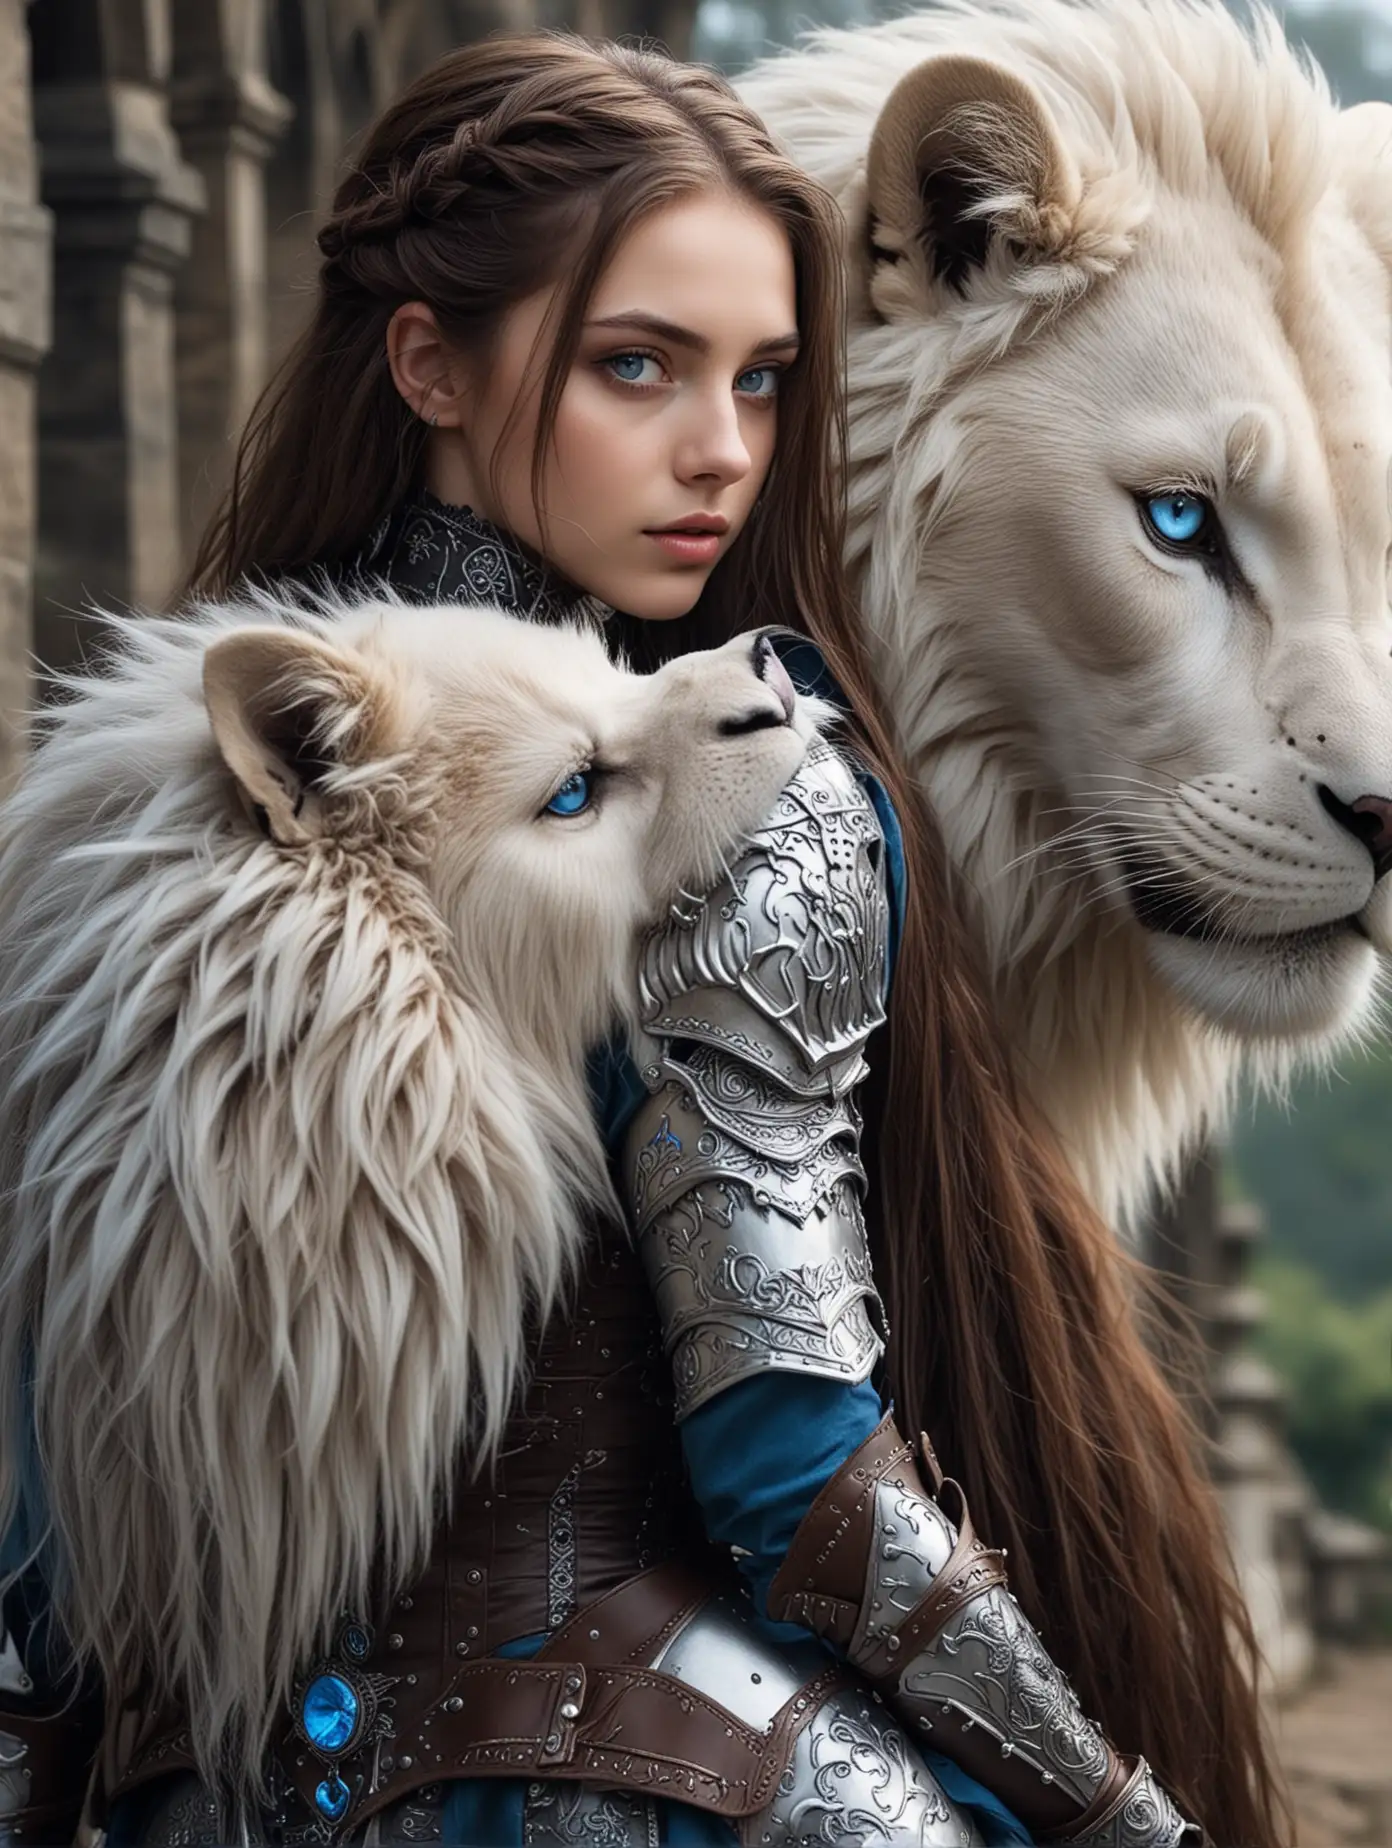 Gothic Warrior Princess Kissing a WhiteBlue Lion